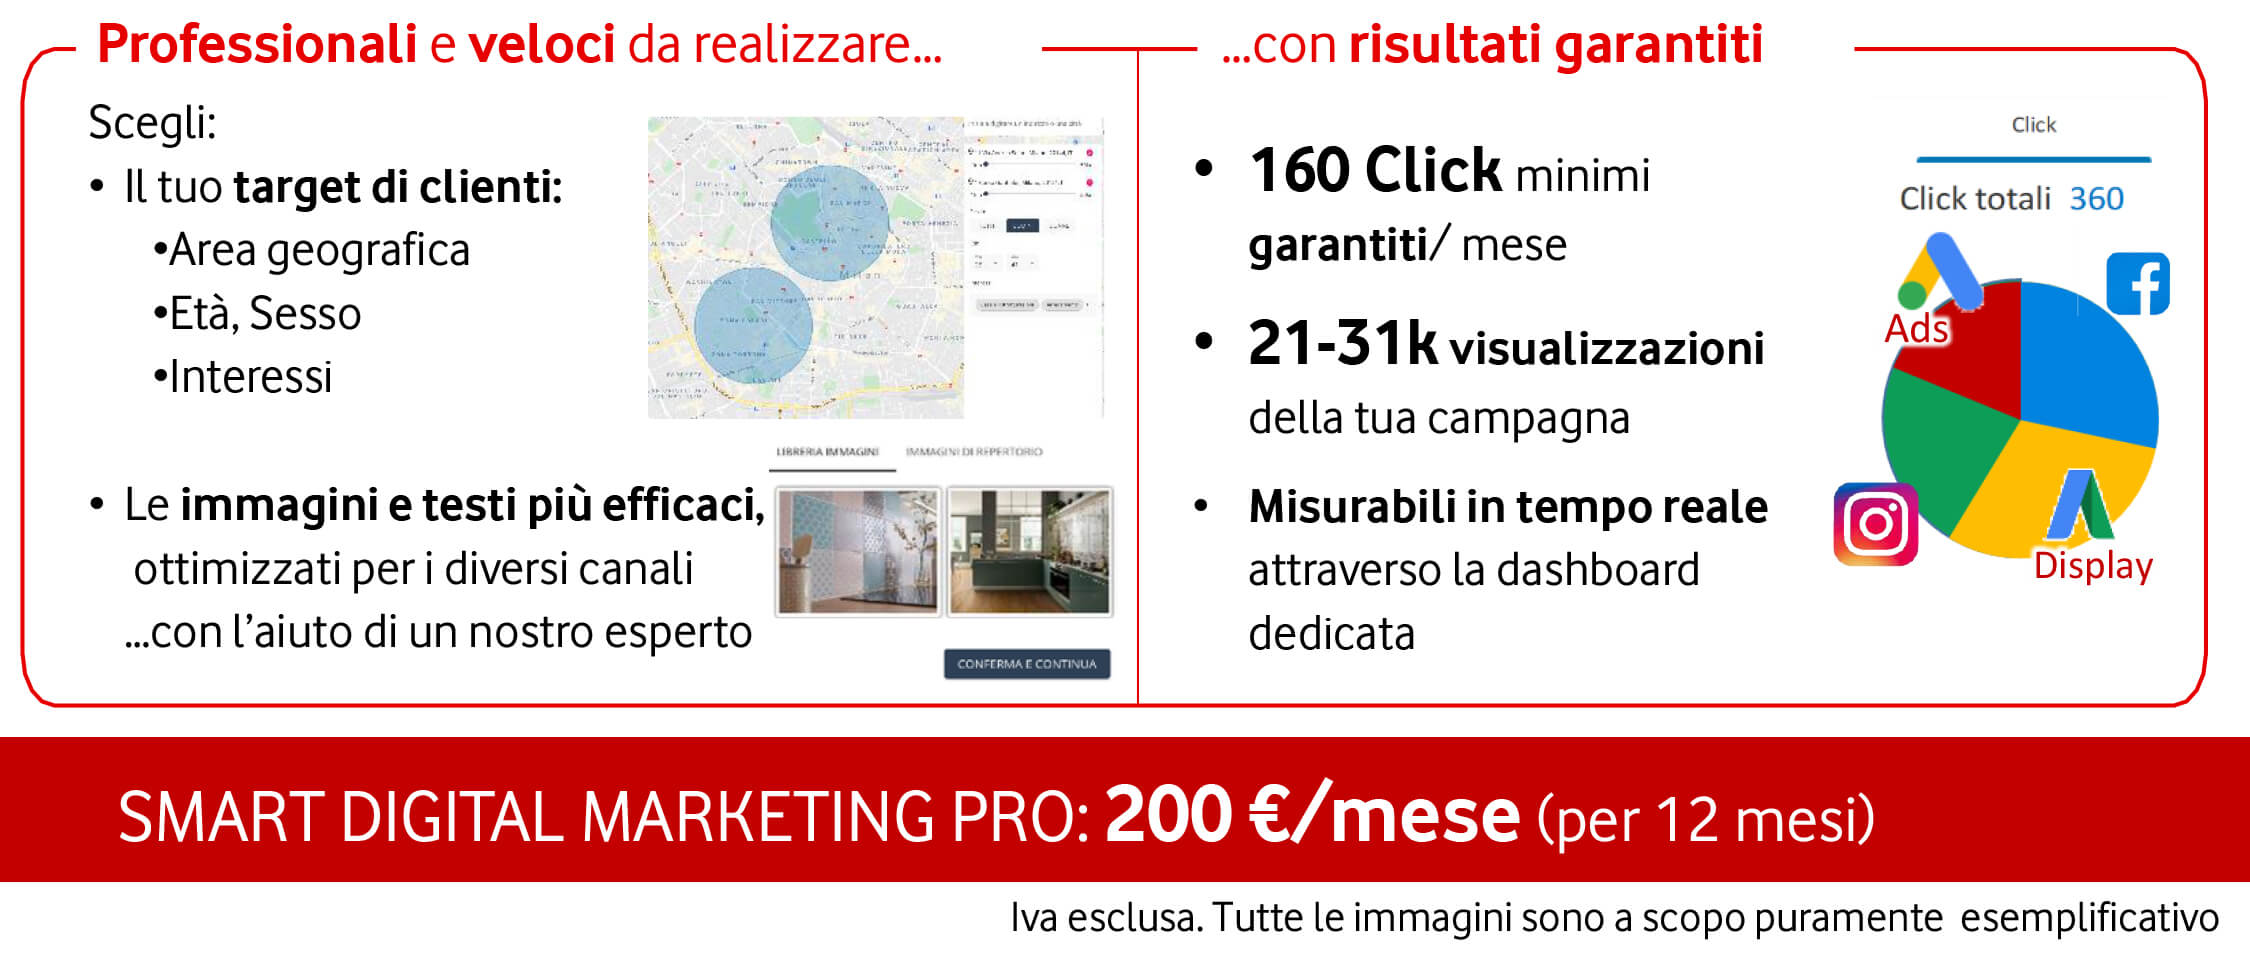 Smart Digital Marketing Pro da 200€/mese